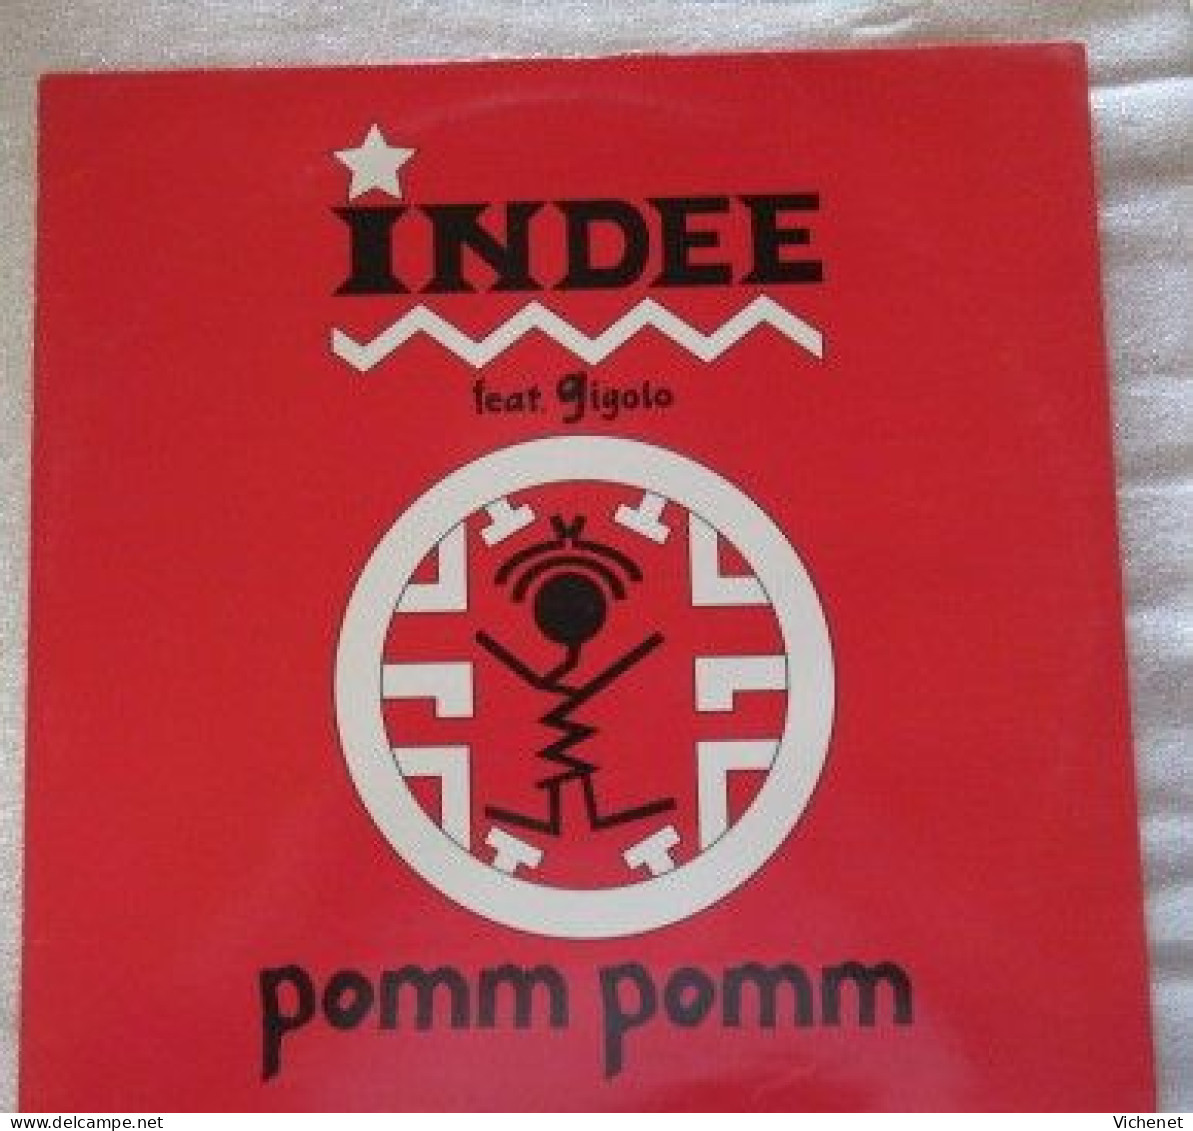 Indee  Feat. Gigolo  – Pomm Pomm - Maxi - 45 G - Maxi-Single